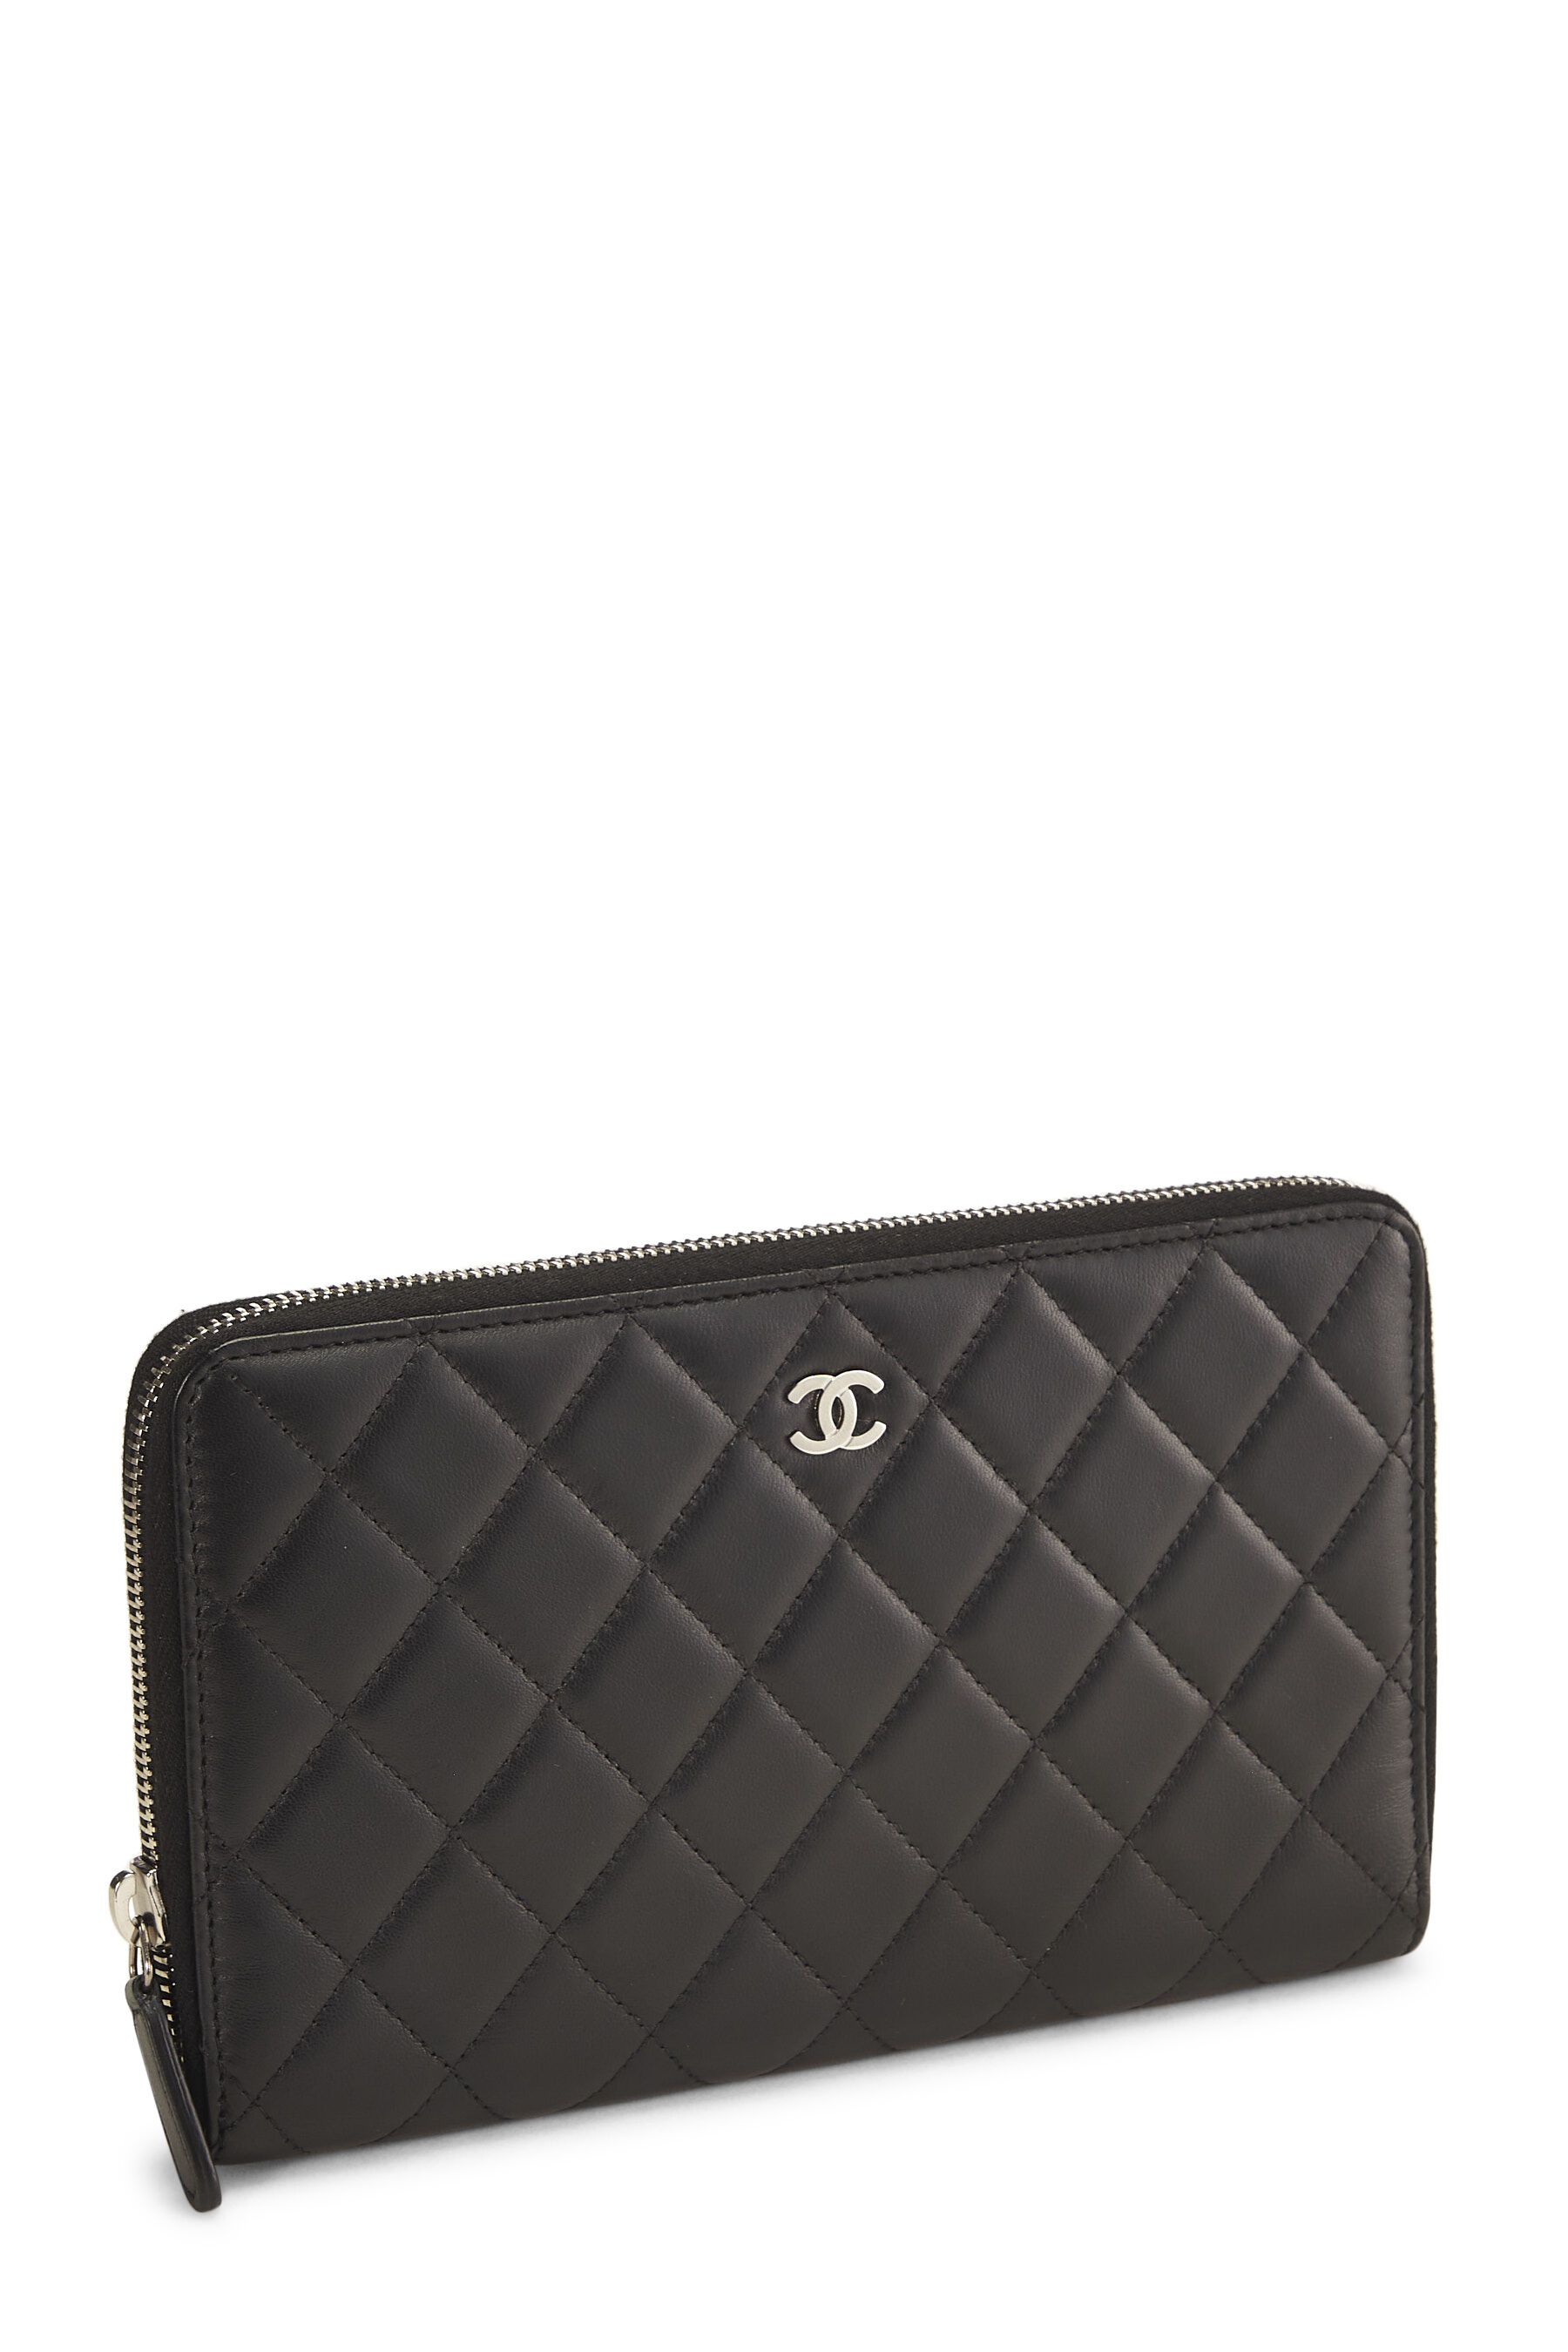 Chanel Black Quilted Lambskin 'CC' Organizer Wallet Q6A0LZ1IKB000